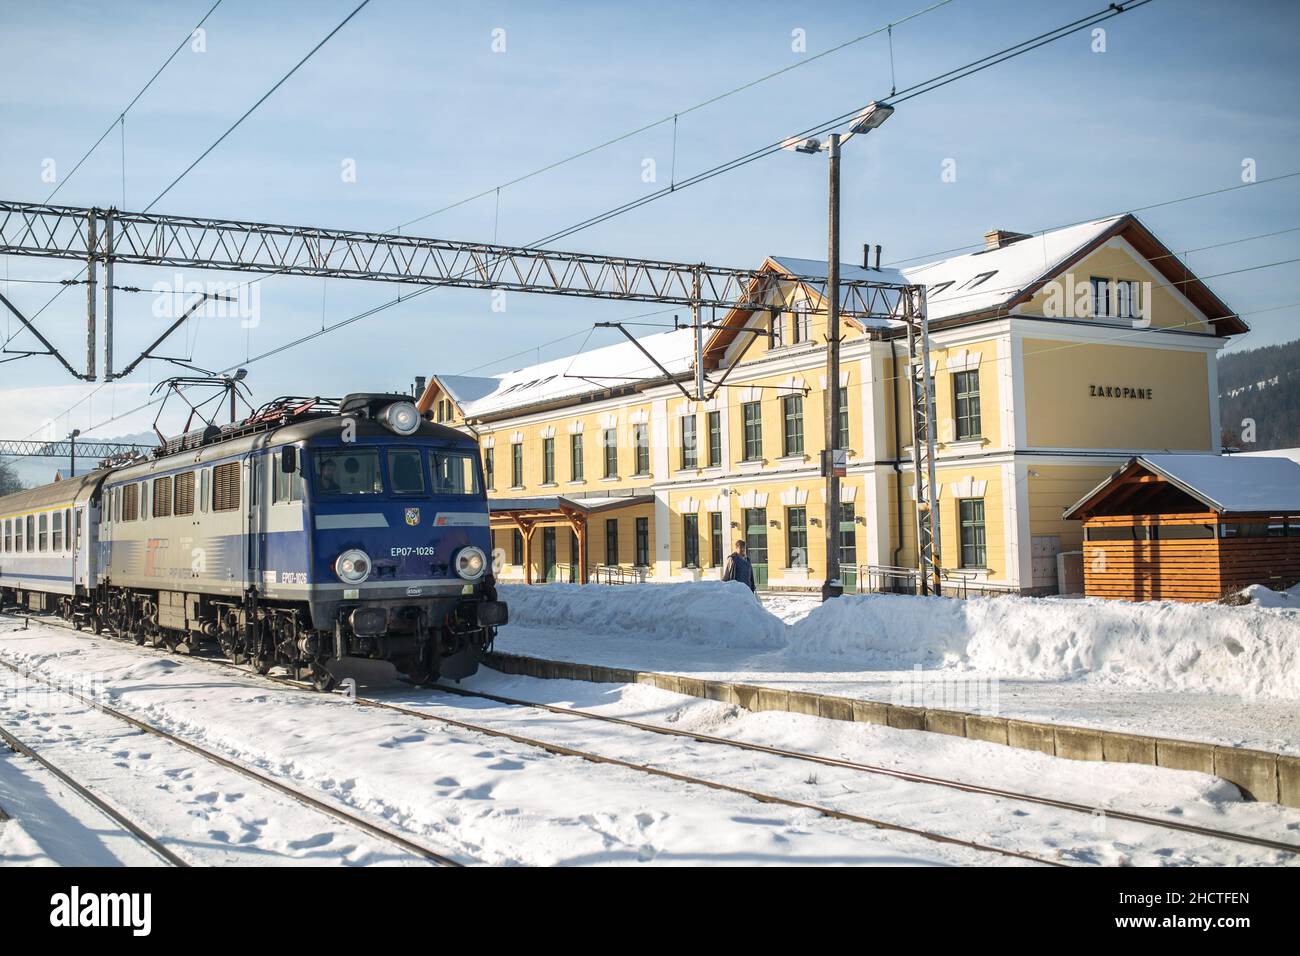 Zakopane, Poland - December 28, 2021: Train at Zakopane train station on December 28, 2021. Stock Photo